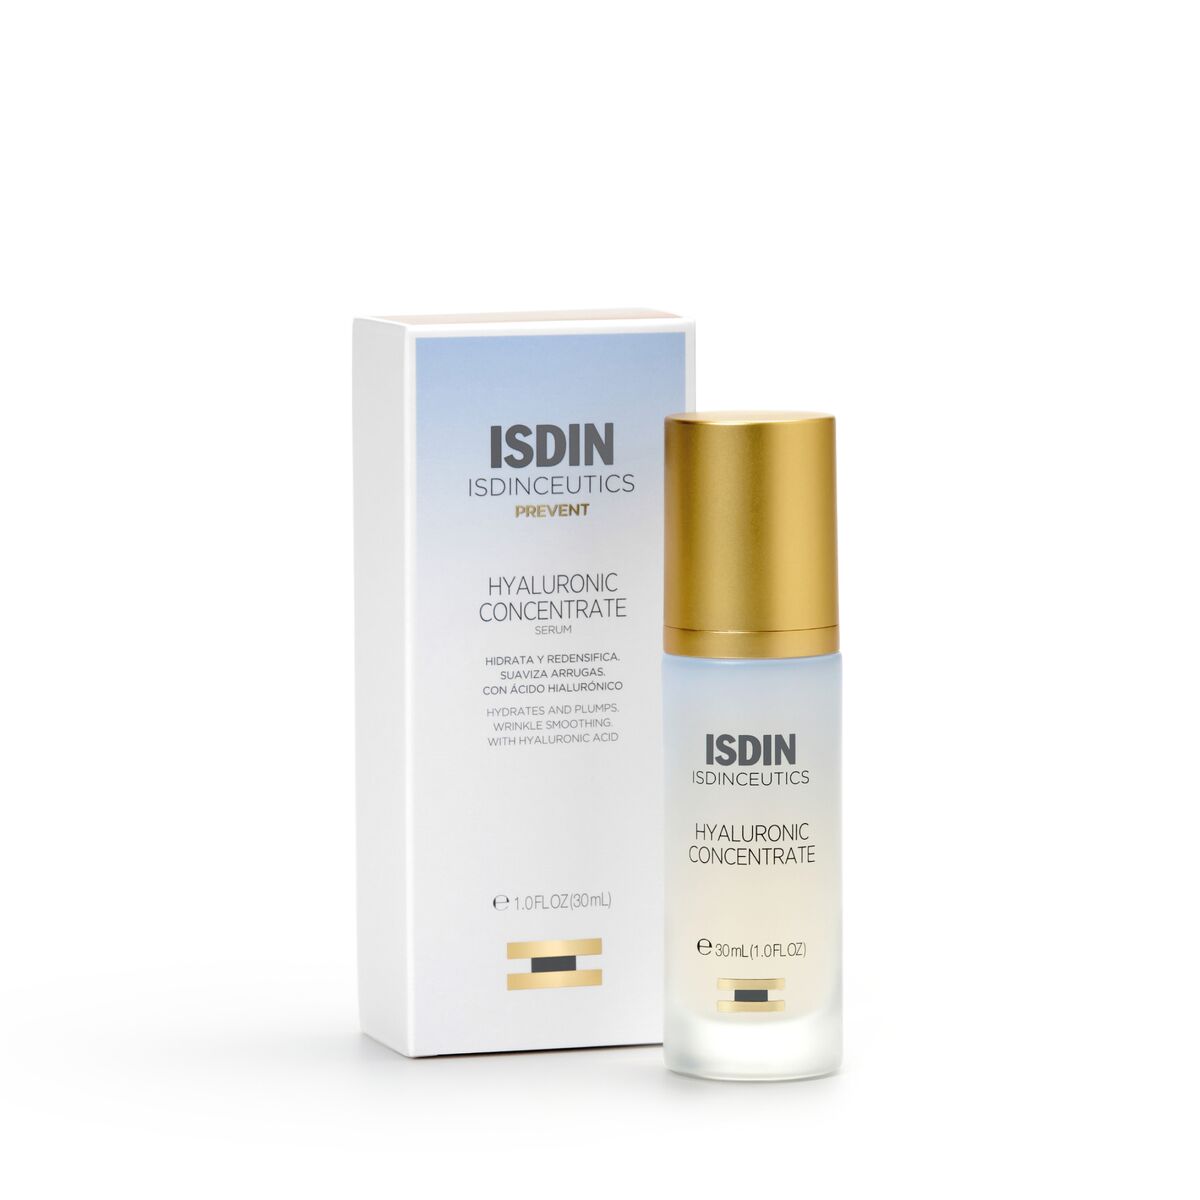 Isdin Essential Cleansing - Aceite Limpiador Facial de ISDIN ≡ SEPHORA